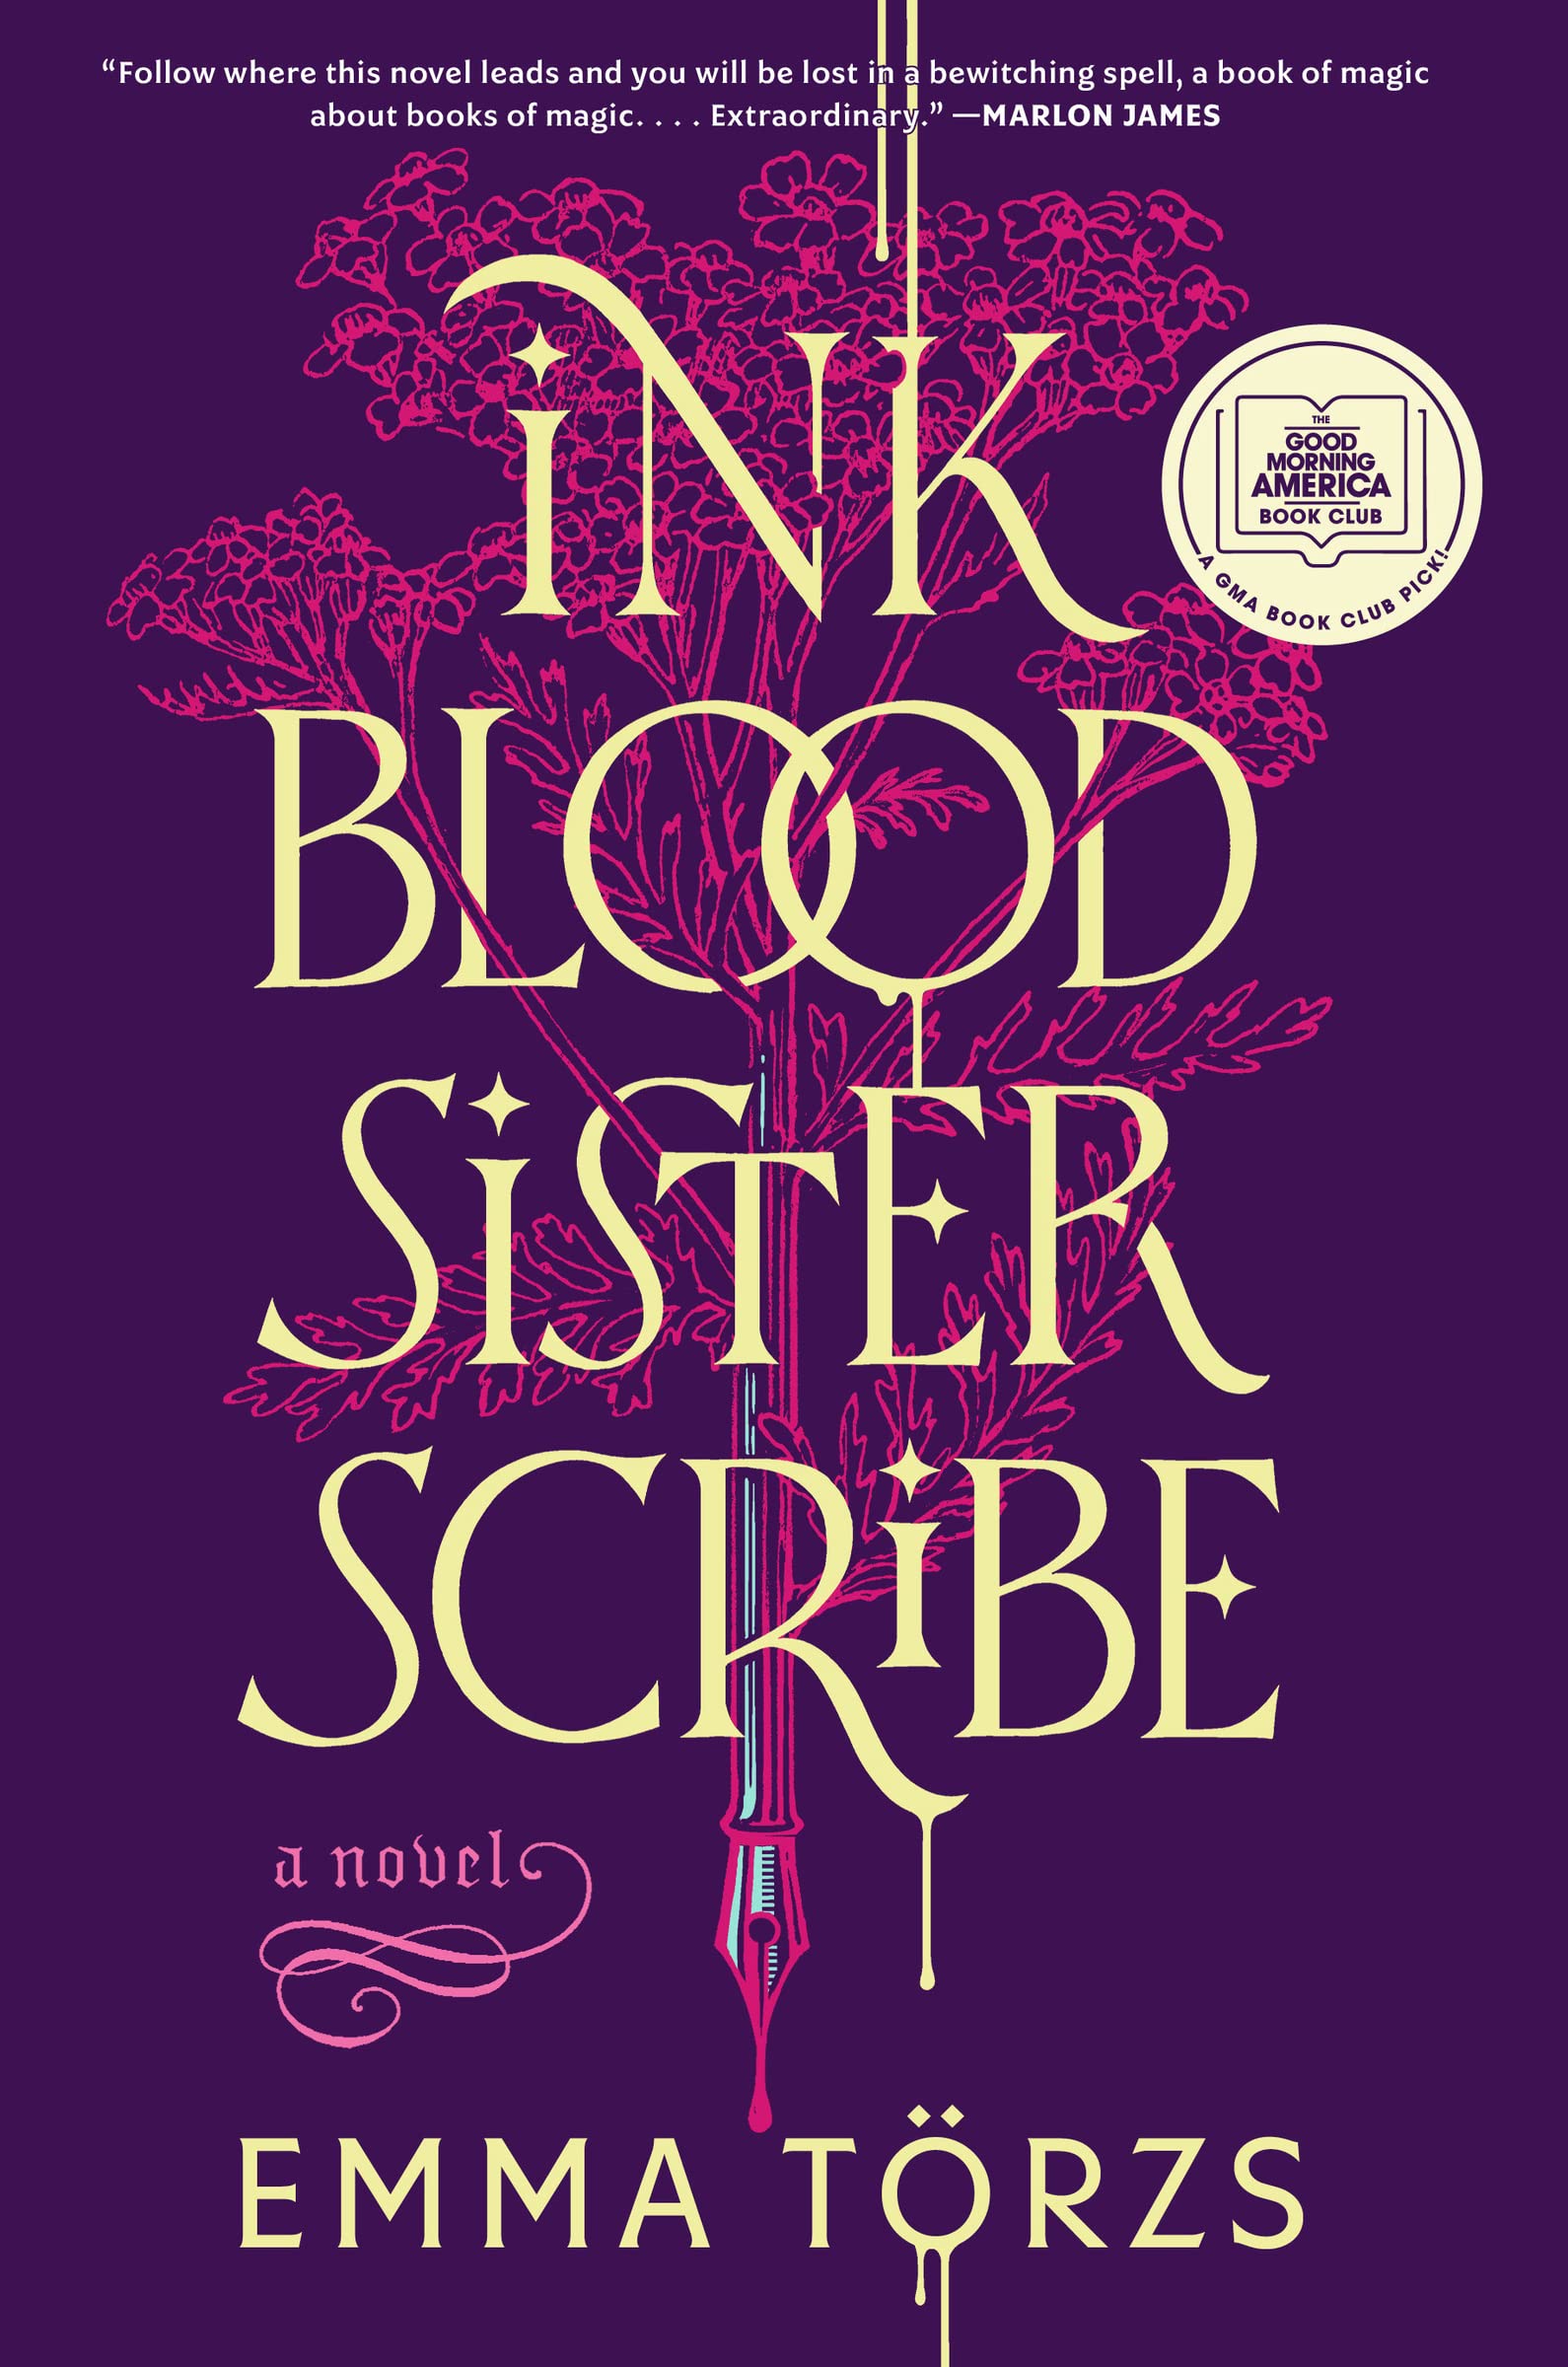 Image for "Ink Blood Sister Scribe"